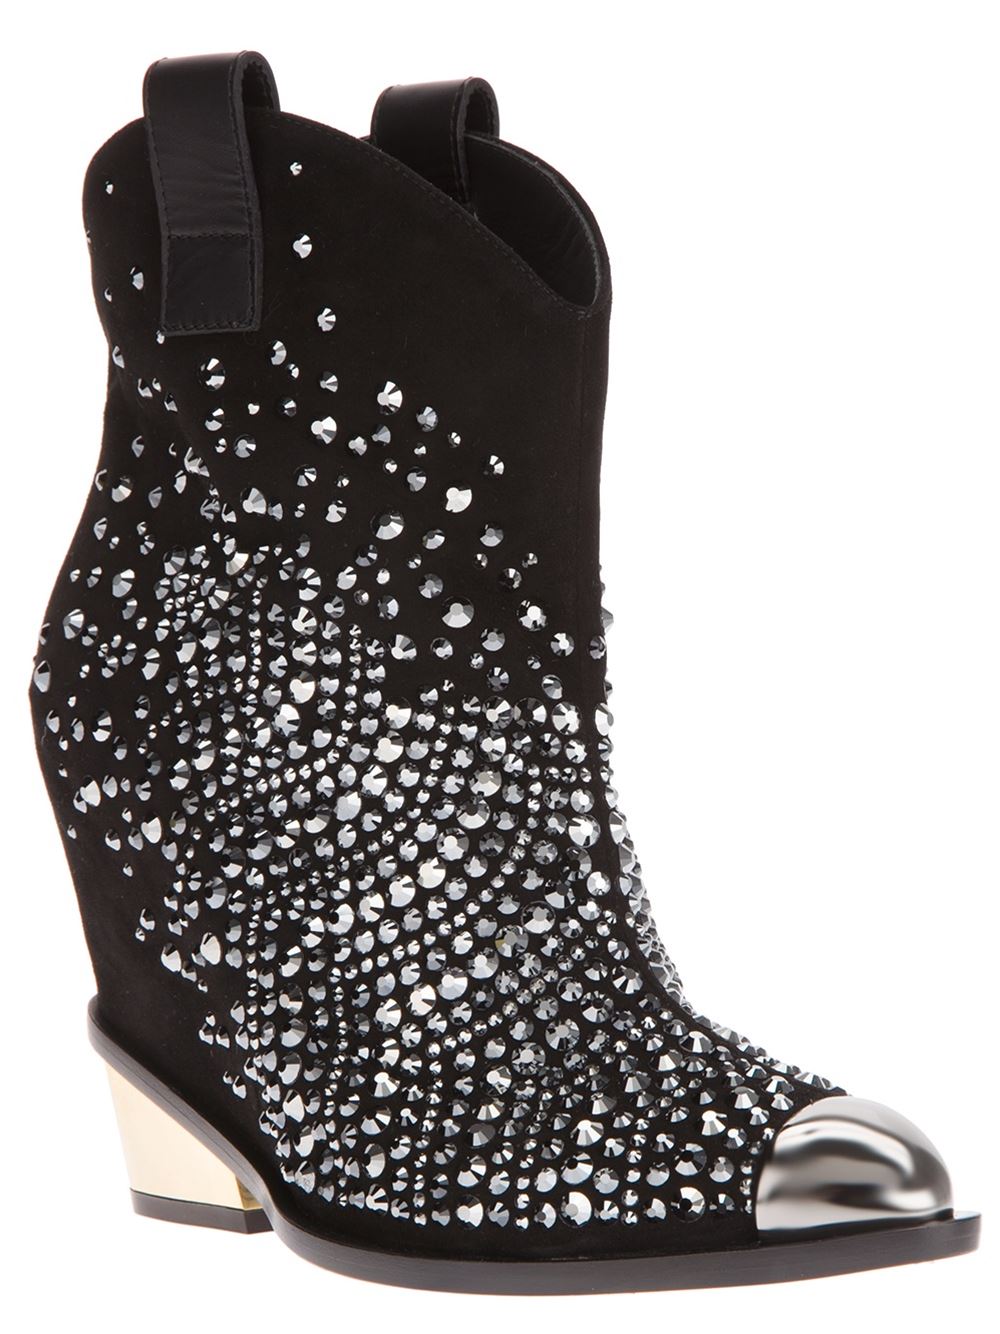 Black suede cowboy boot from Giuseppe Zanotti Design featuring a silver-tone metal toe cap